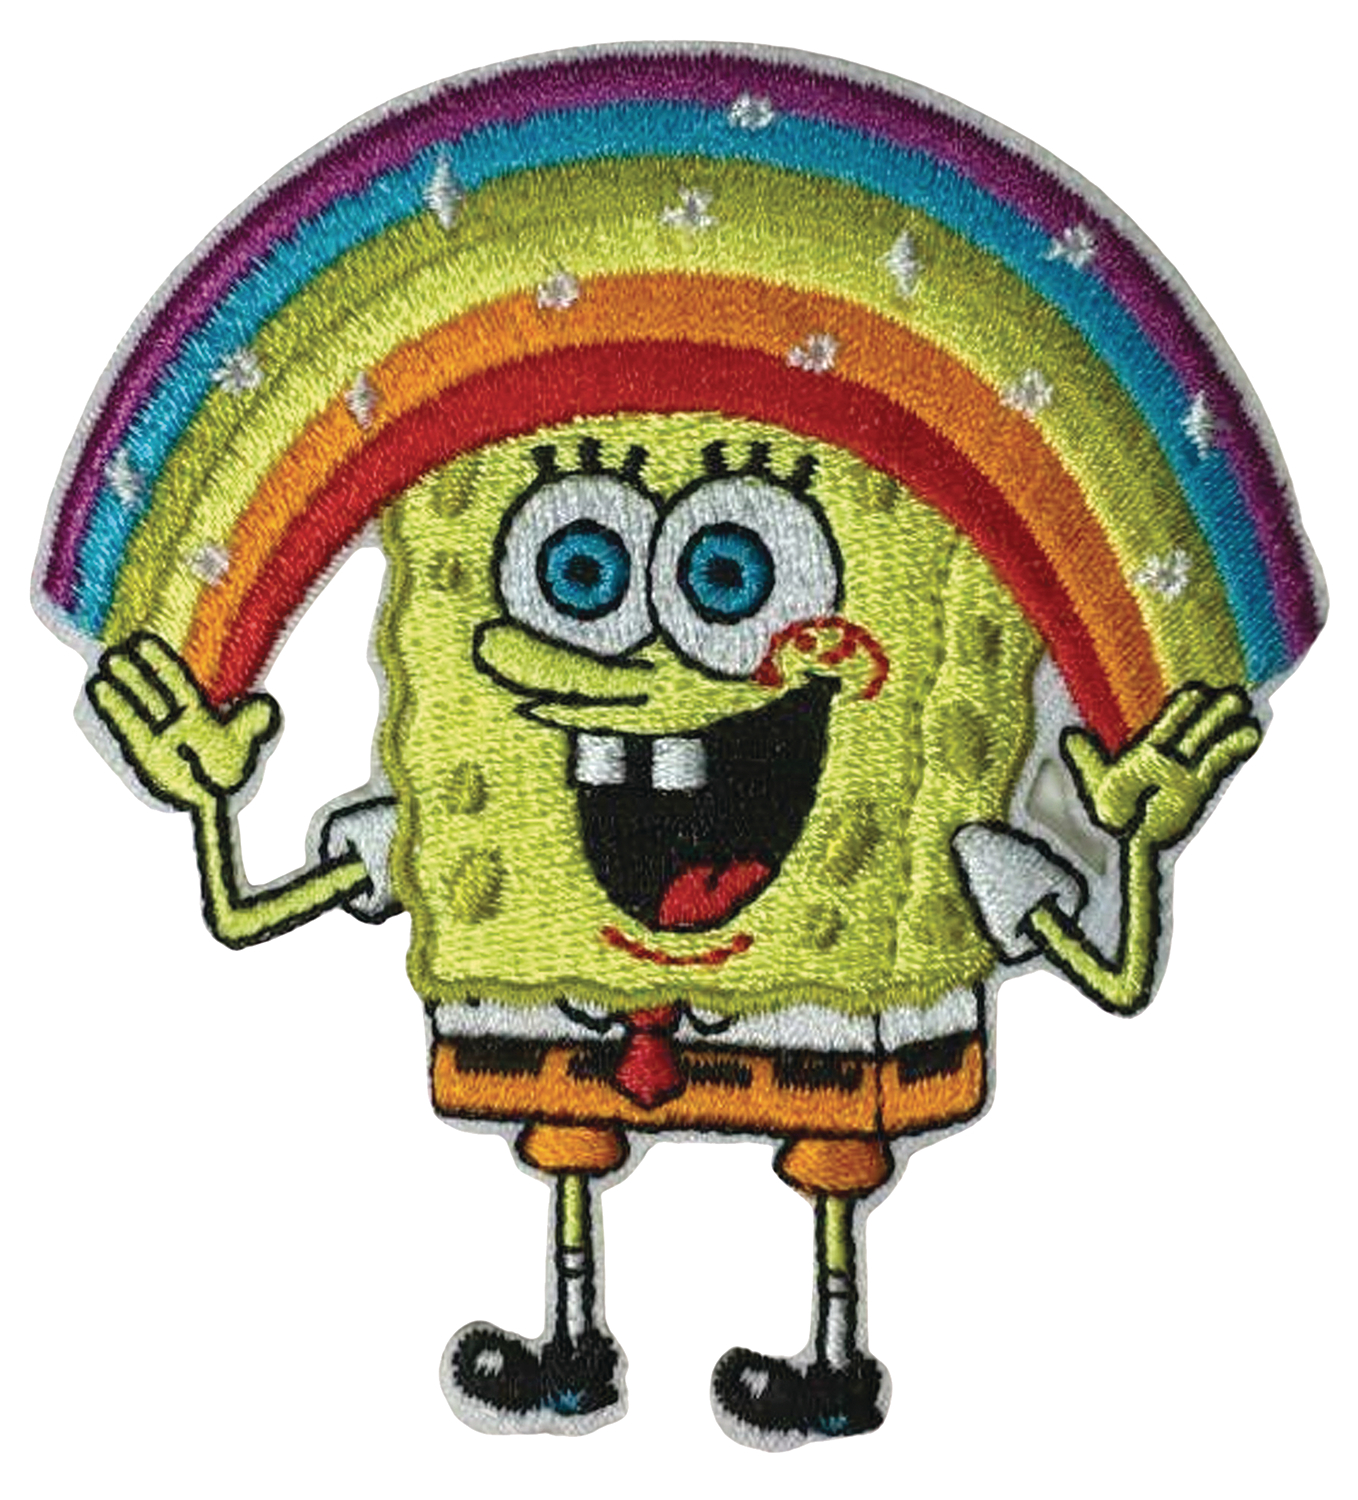 Spongebob Squarepants Imagination Rainbow Patch